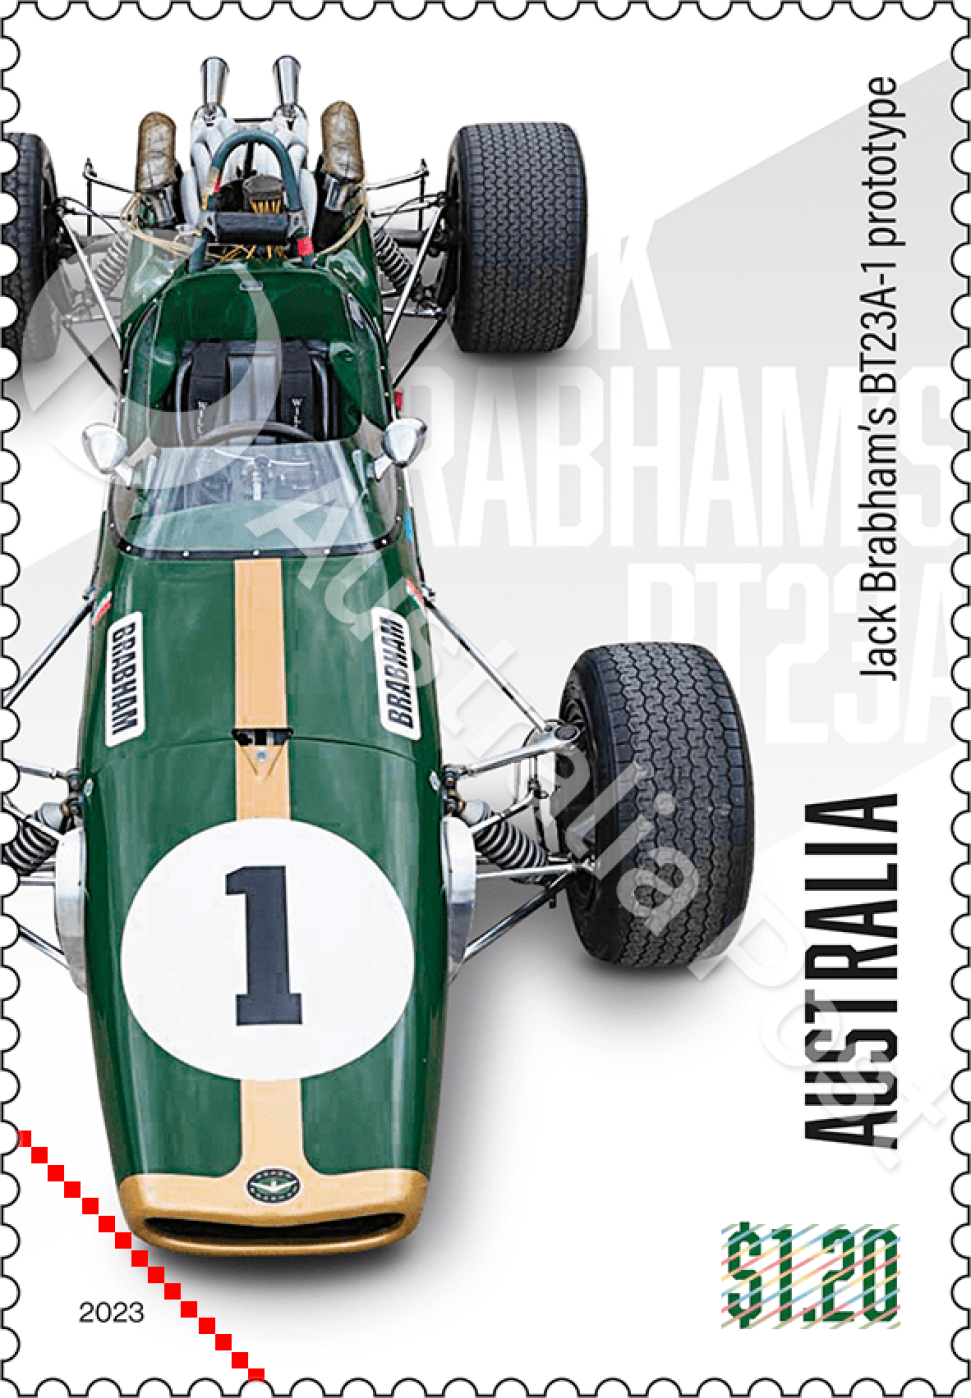 $1.20 Jack Brabham’s BT23A-1 prototype